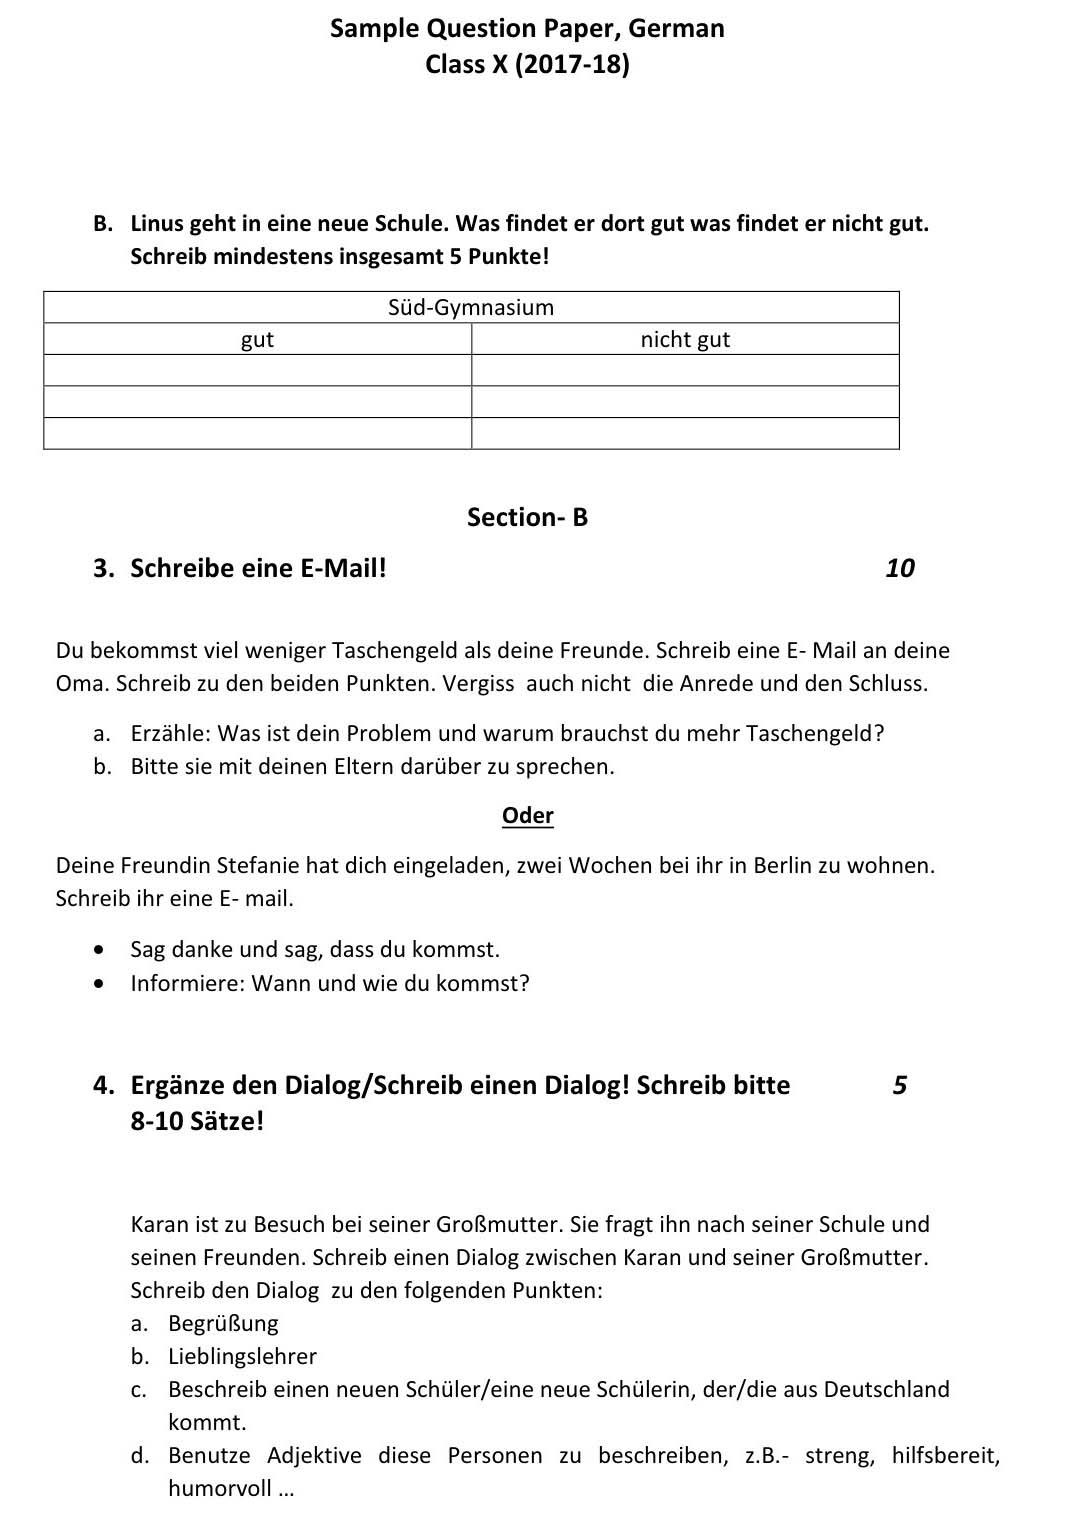 German CBSE Class X Sample Question Paper 2017 18 - Image 3